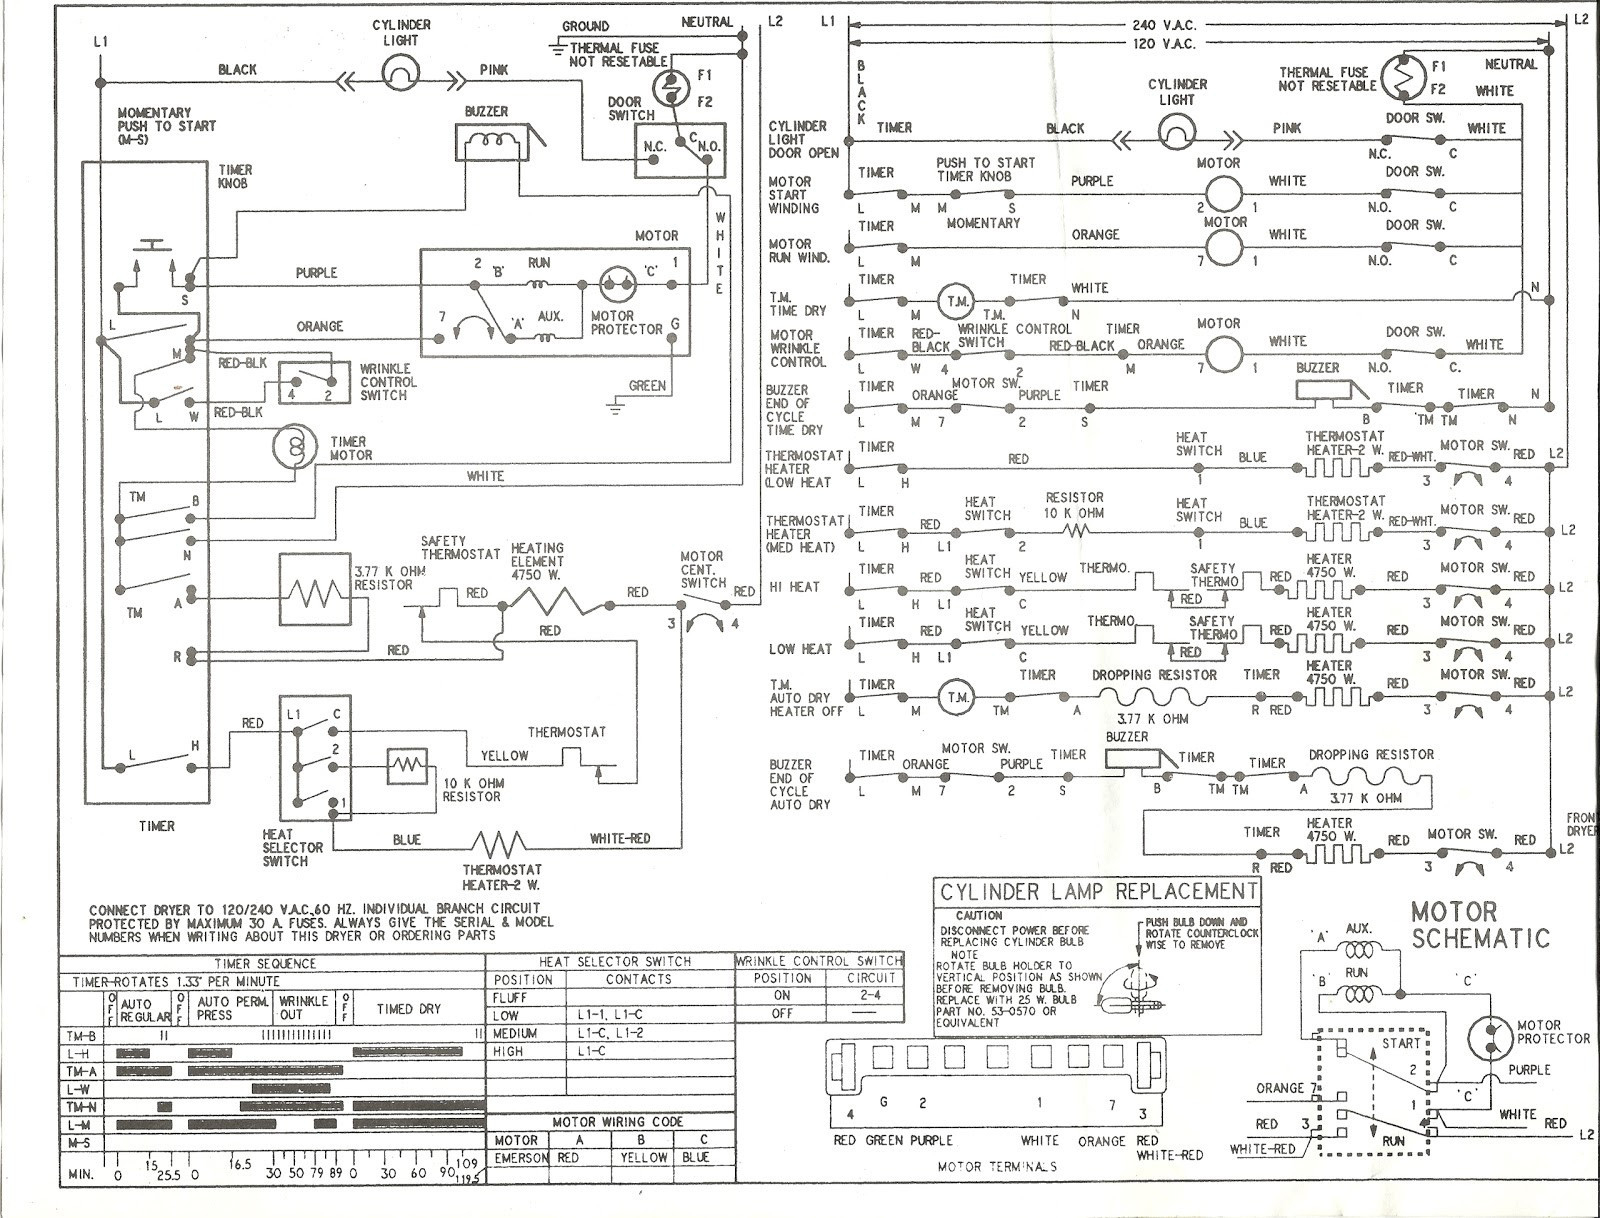 Kenmore Dryer Wiring Diagram 220 - Wiring Diagrams - Kenmore Dryer Wiring Diagram